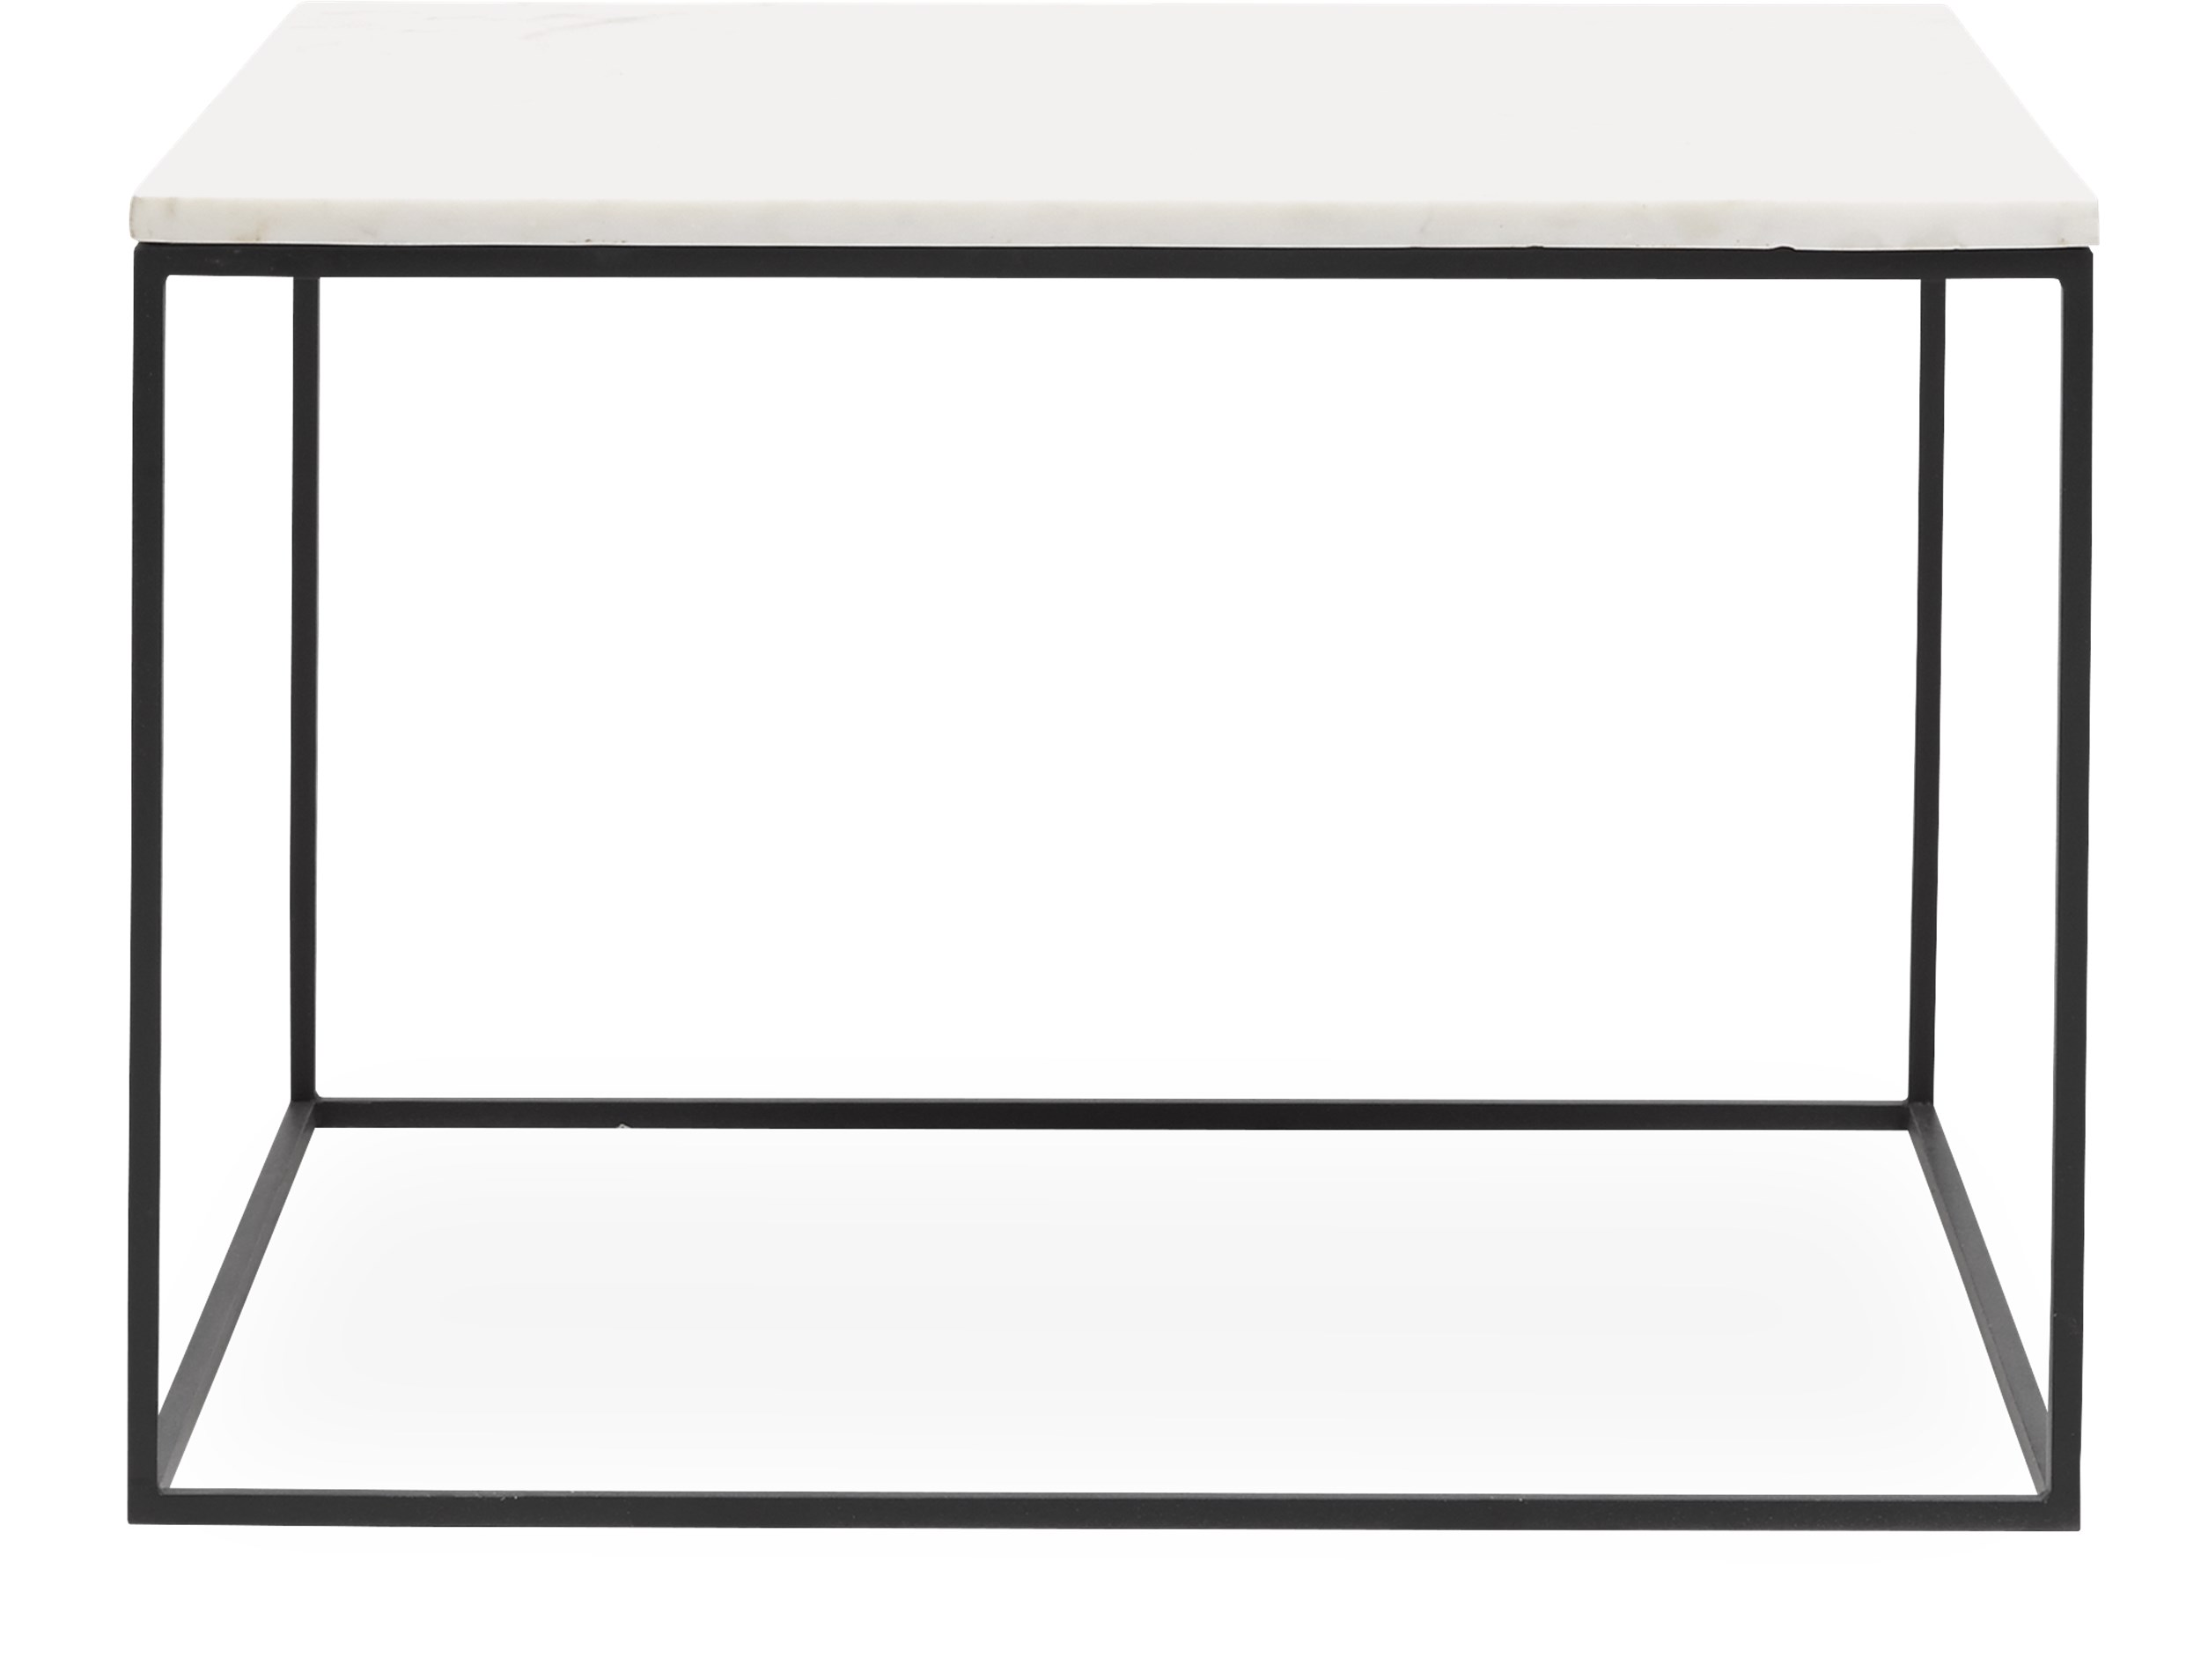 Square Soffbord 60 x 41,6 x 60 cm - Bordsskiva i vit marmor och stomme i svartlackerad metall